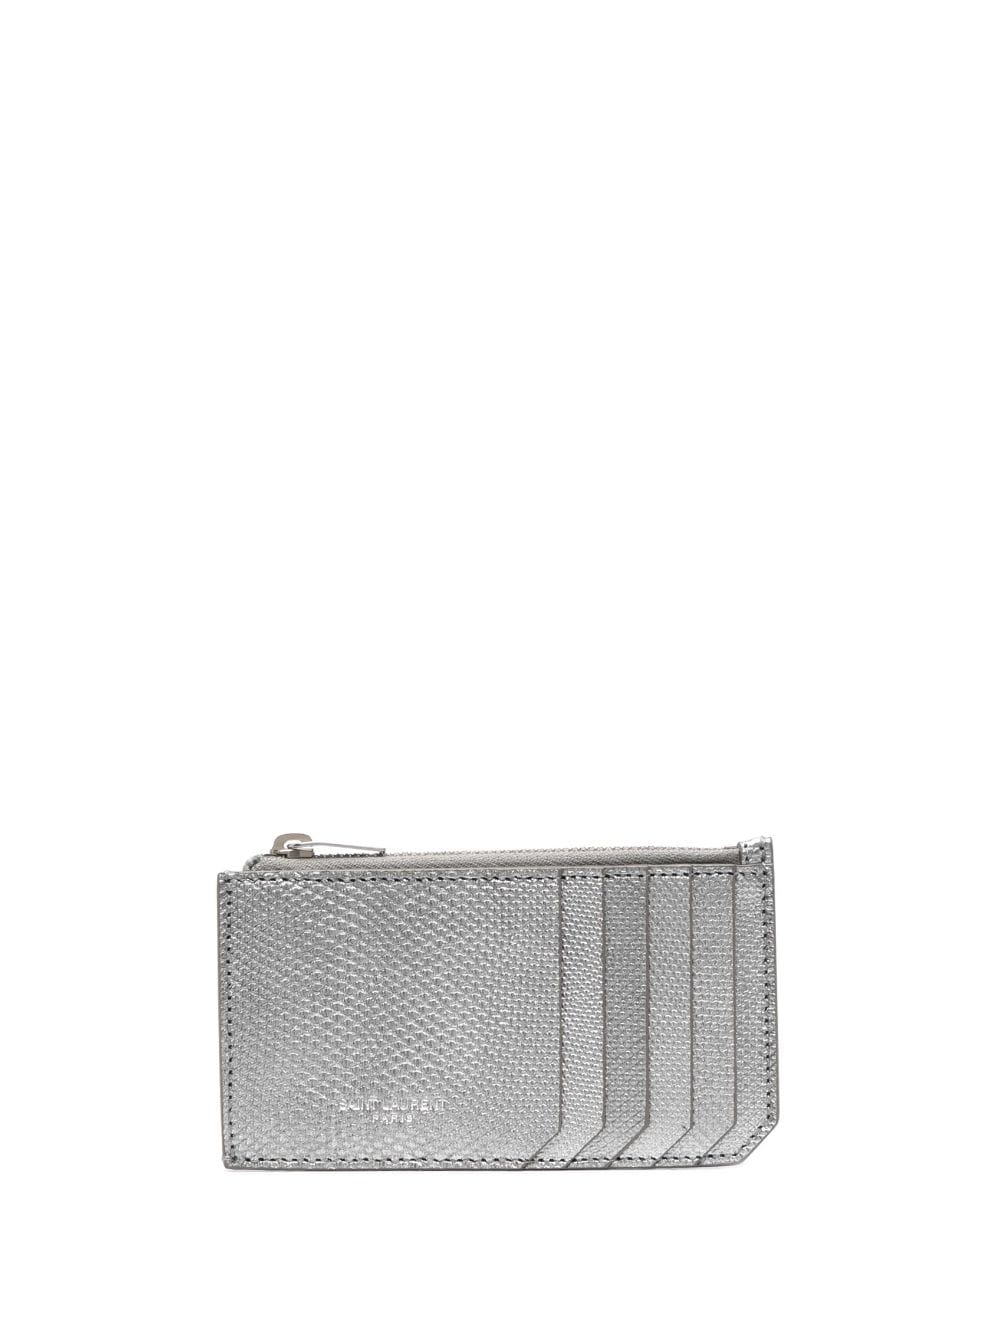 Saint Laurent metallic leather cardholder - Silver von Saint Laurent